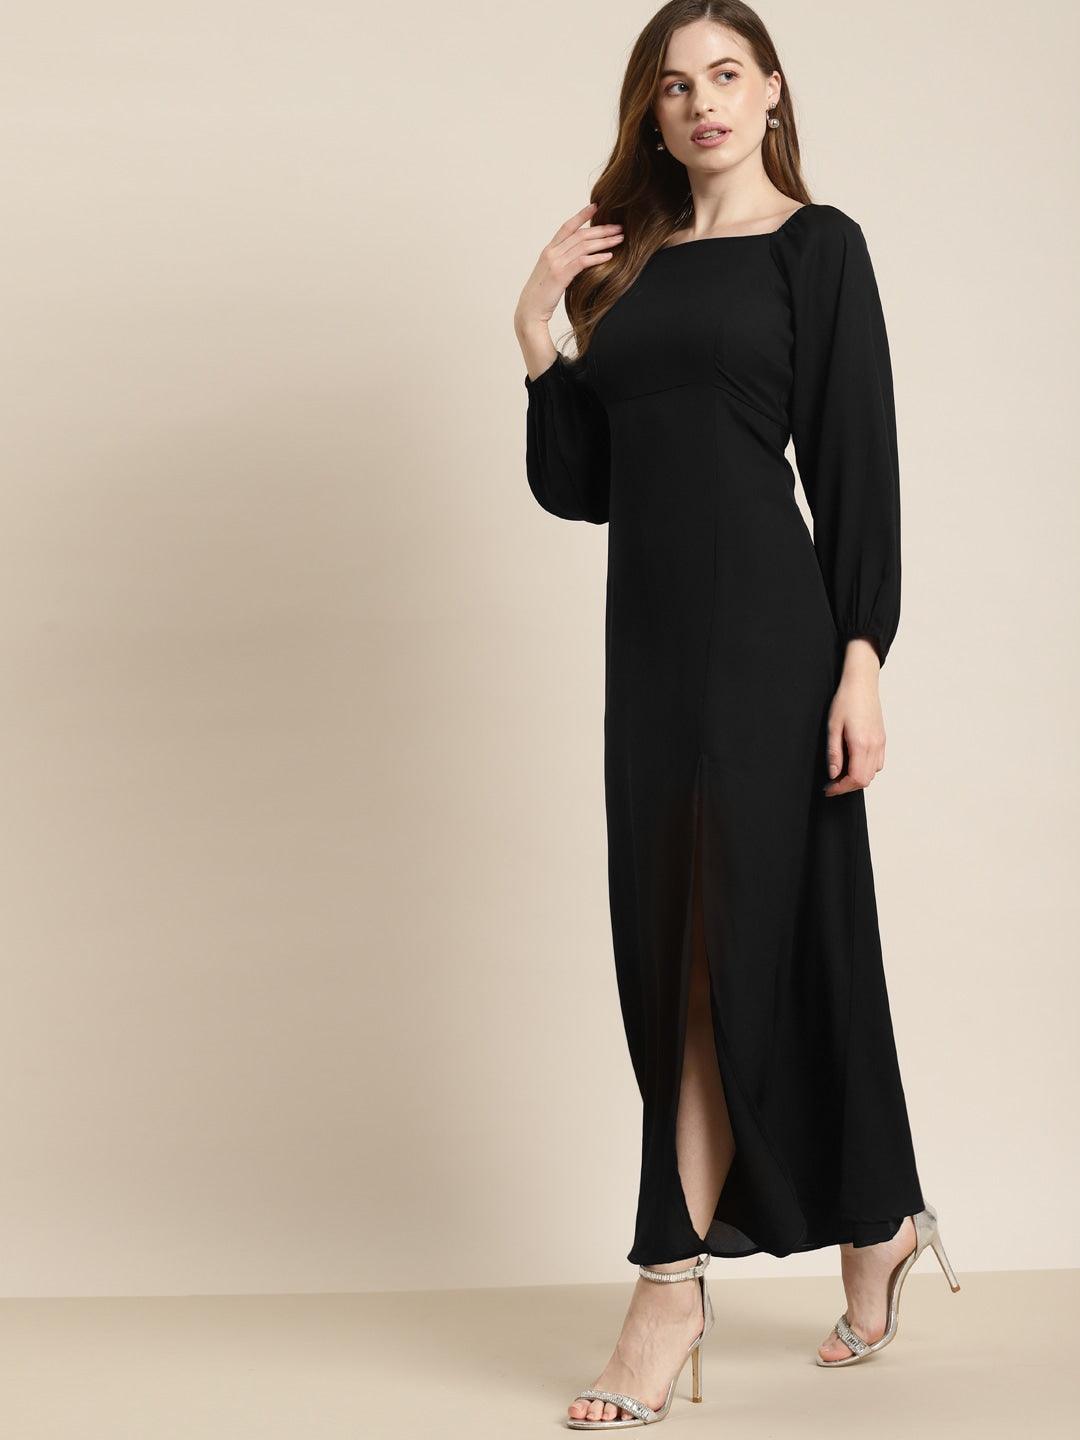 Qurvii Black Solid Maxi Dress with Slit Detail - Qurvii India